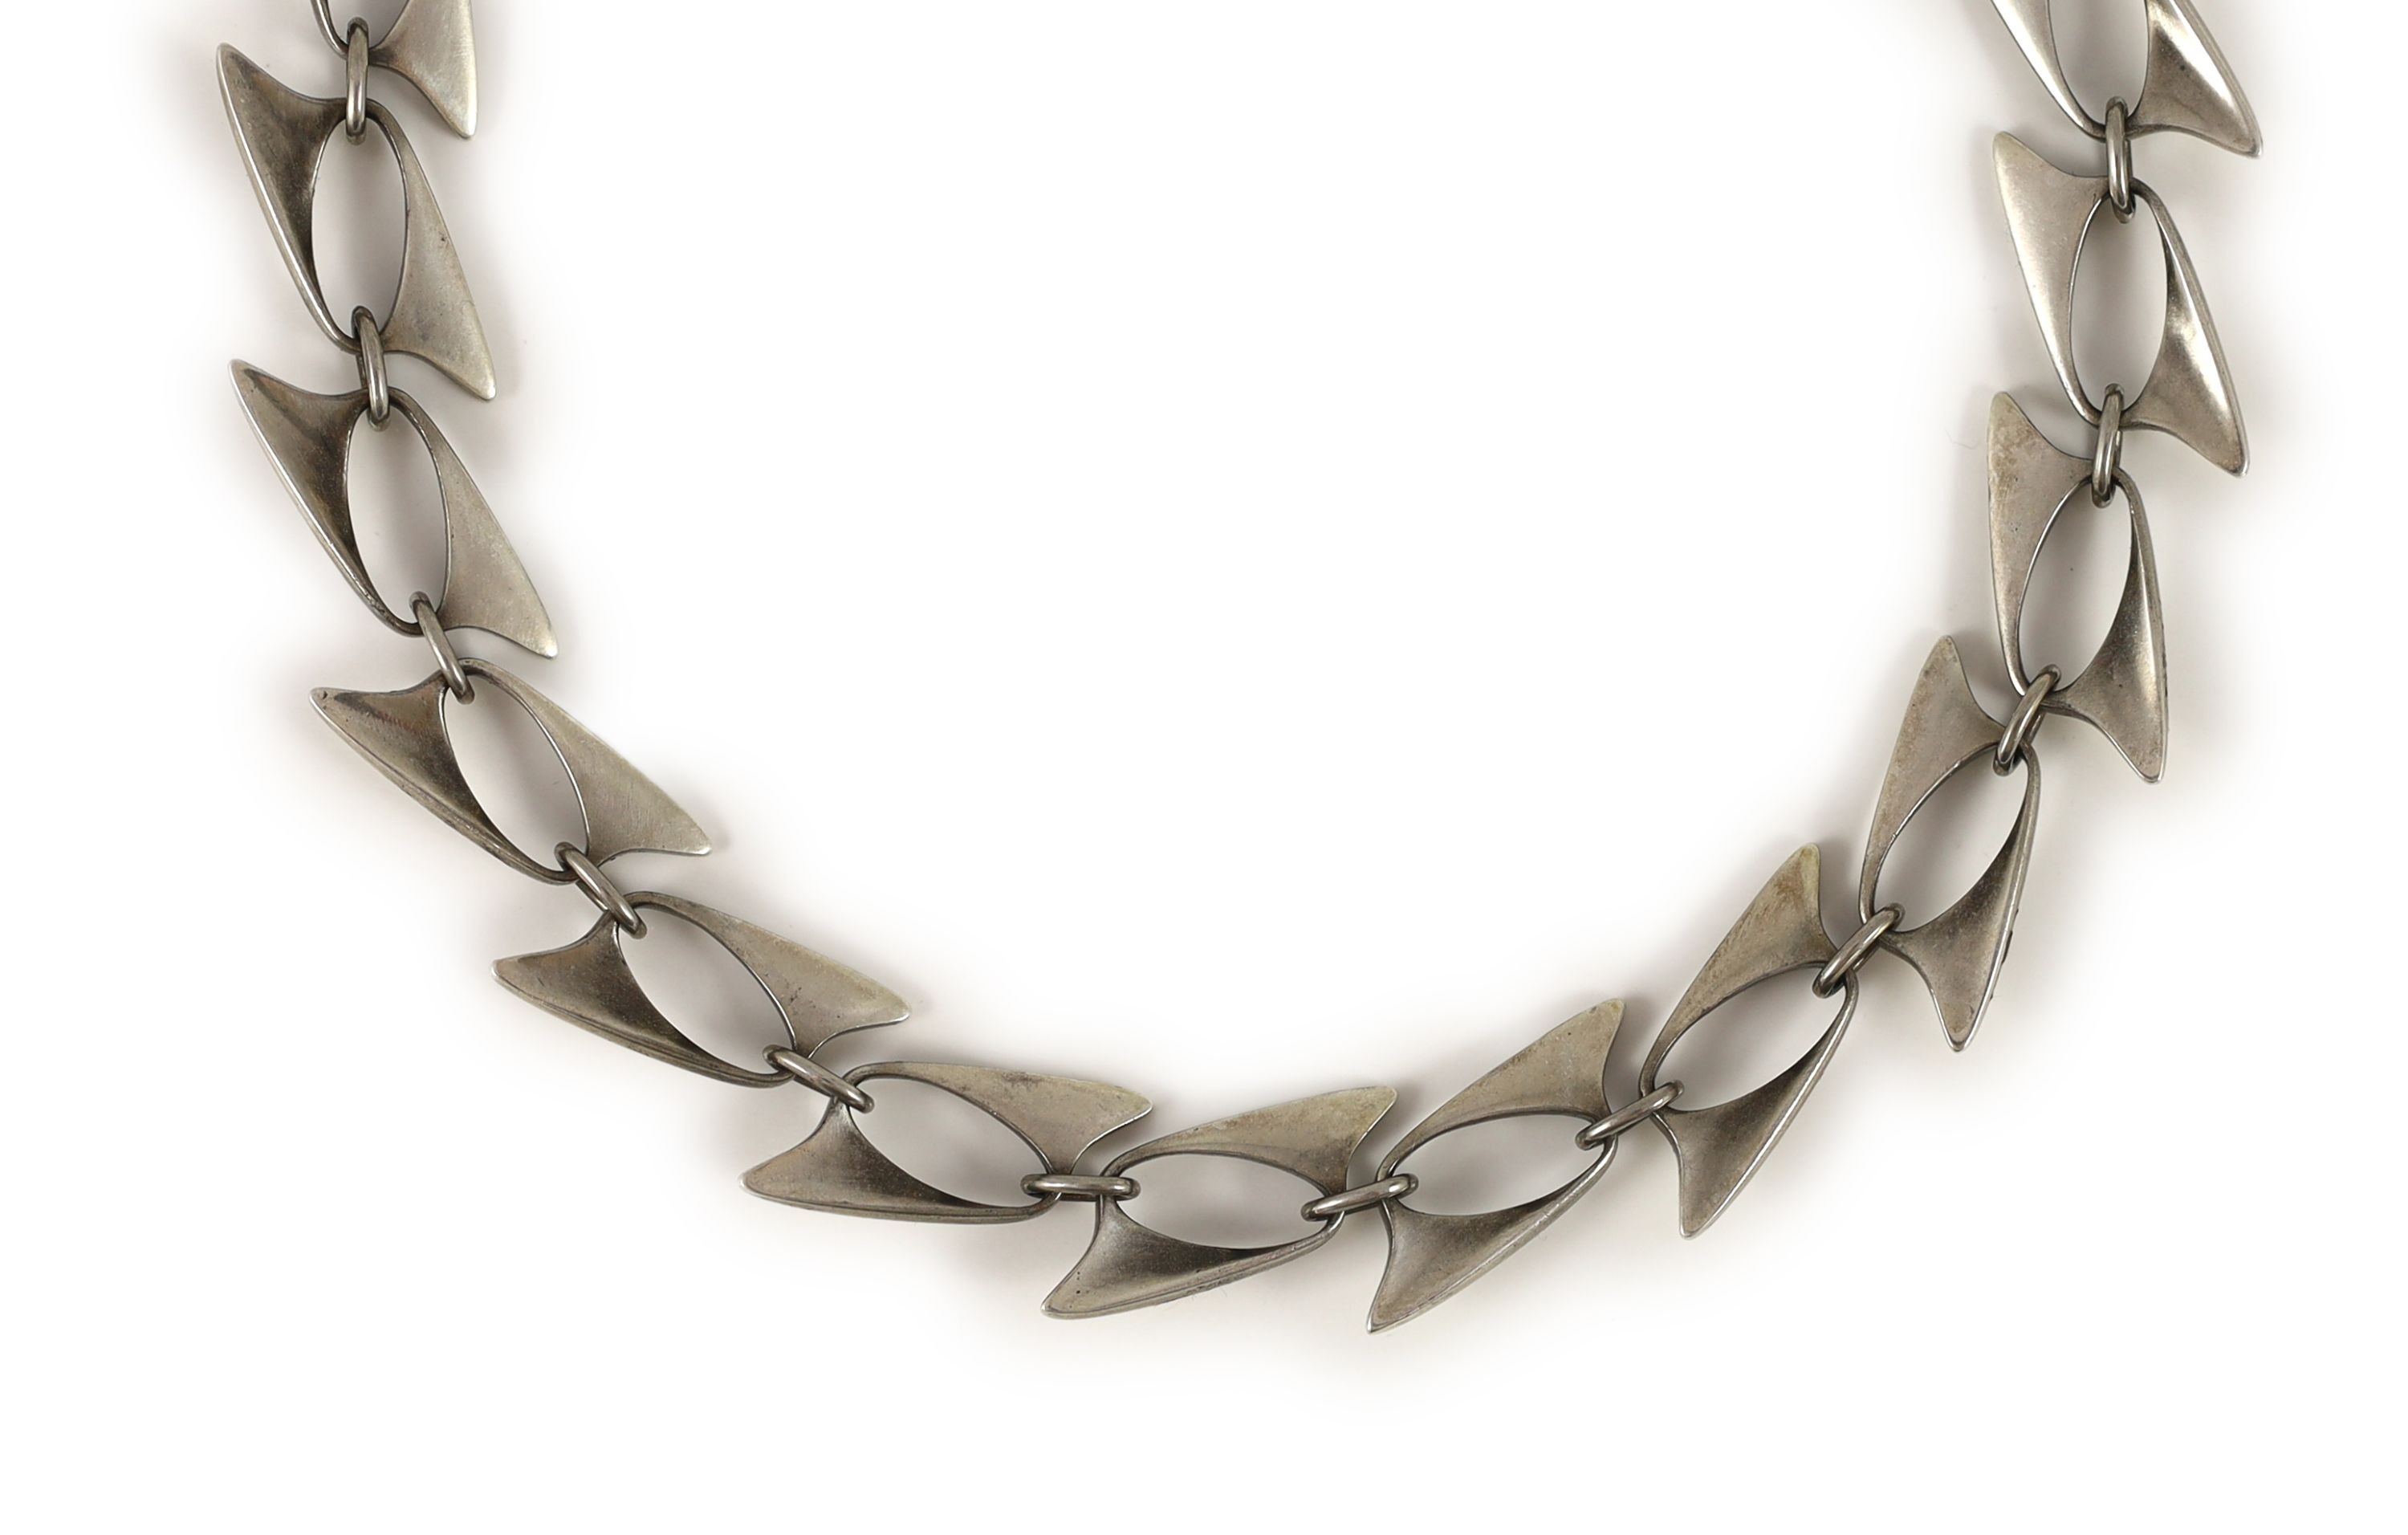 A Georg Jensen sterling silver stylised link necklace, designed by Henning Koppel, no. 273